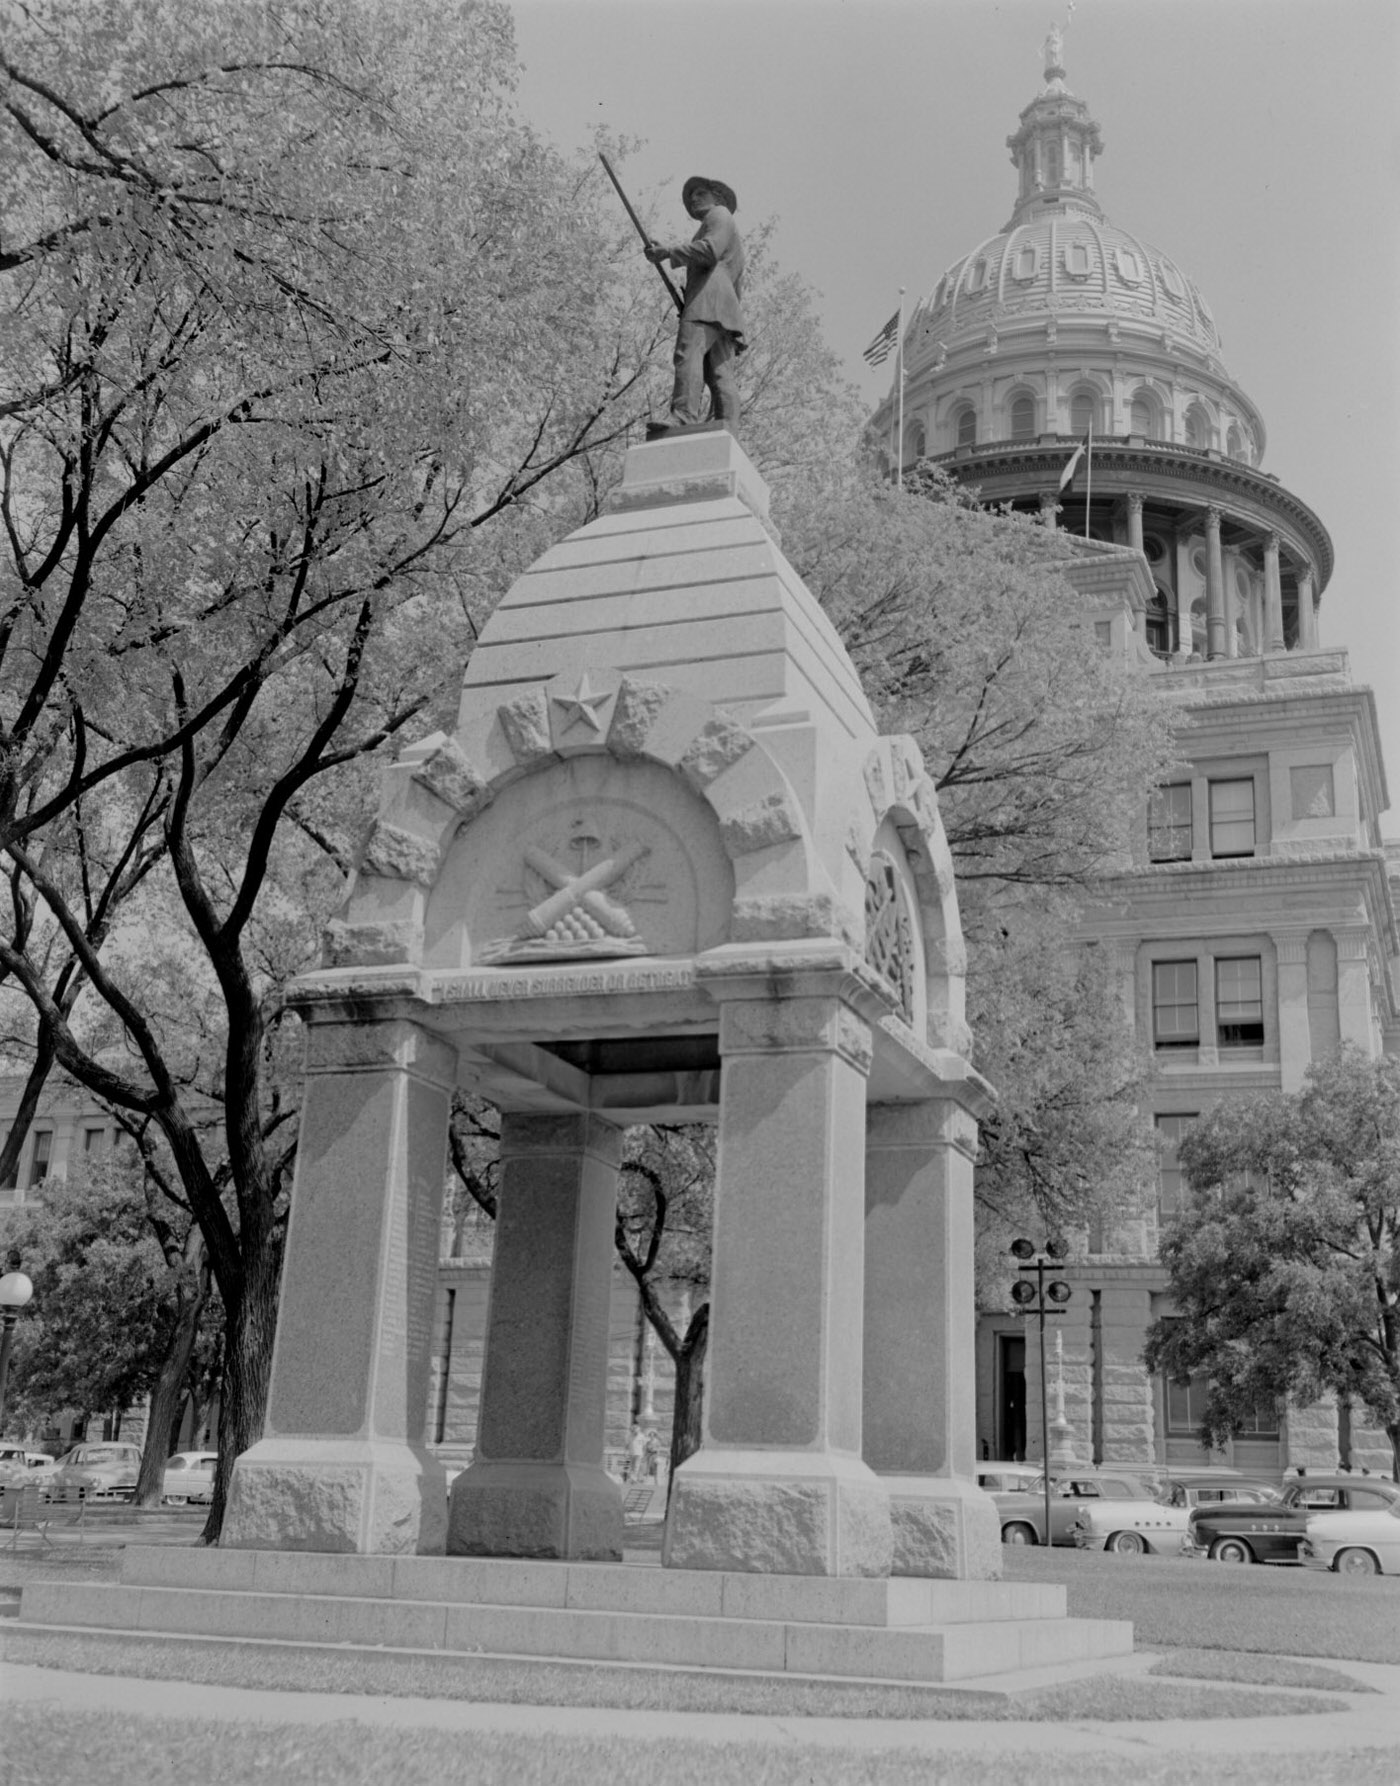 War Memorial with "I Shall Never Surrender or Retreat" Inscription, 1955.